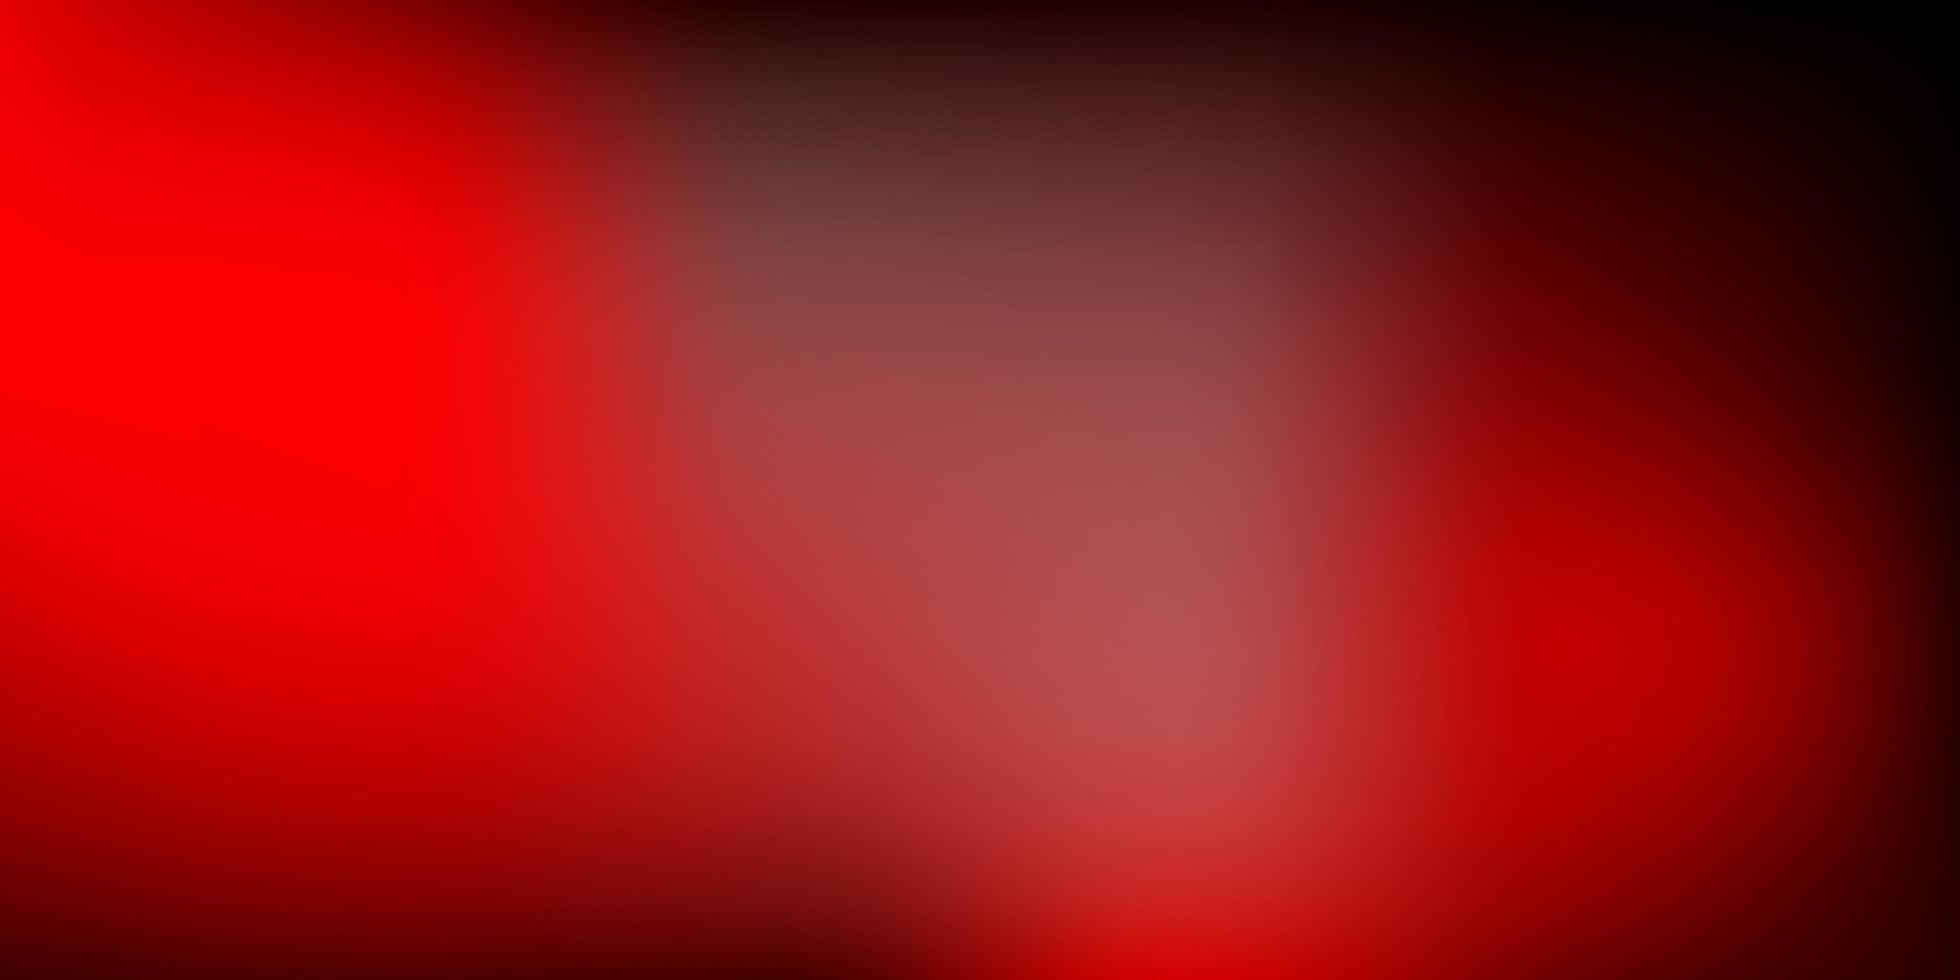 Dark Red vector blurred template